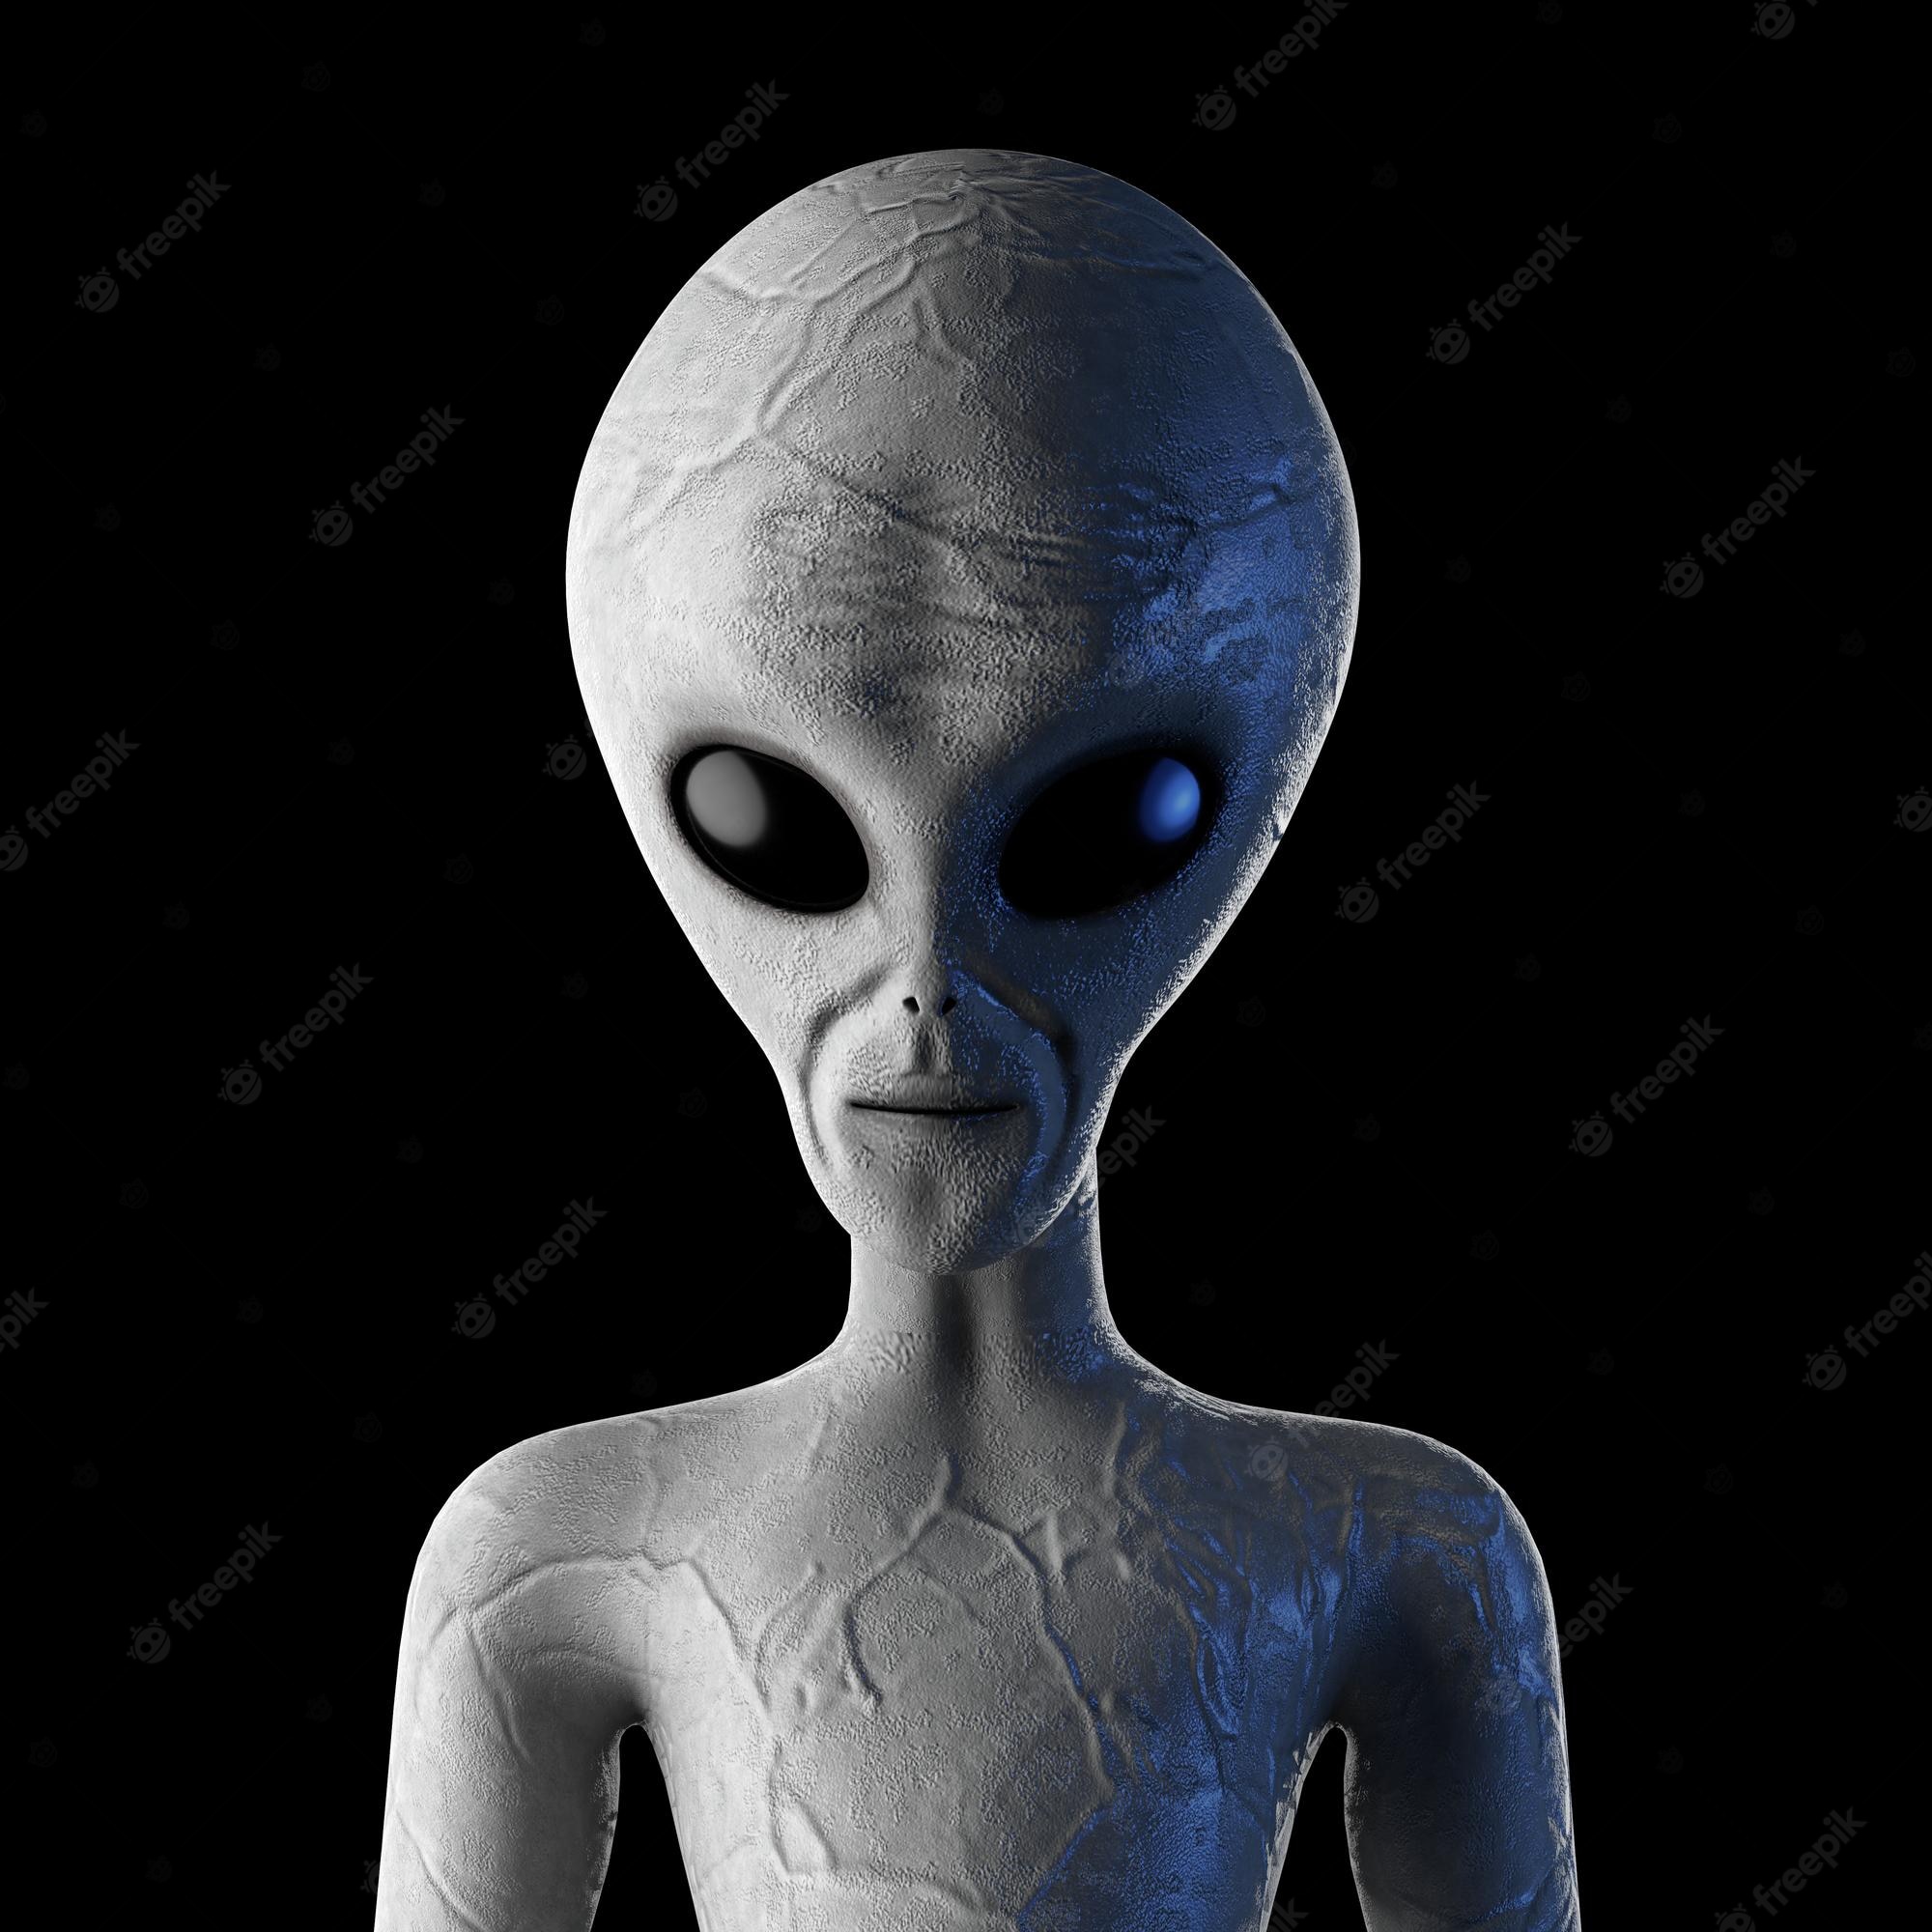 Premium Photo. Portrait of scary gray humanoid alien 3D rendering